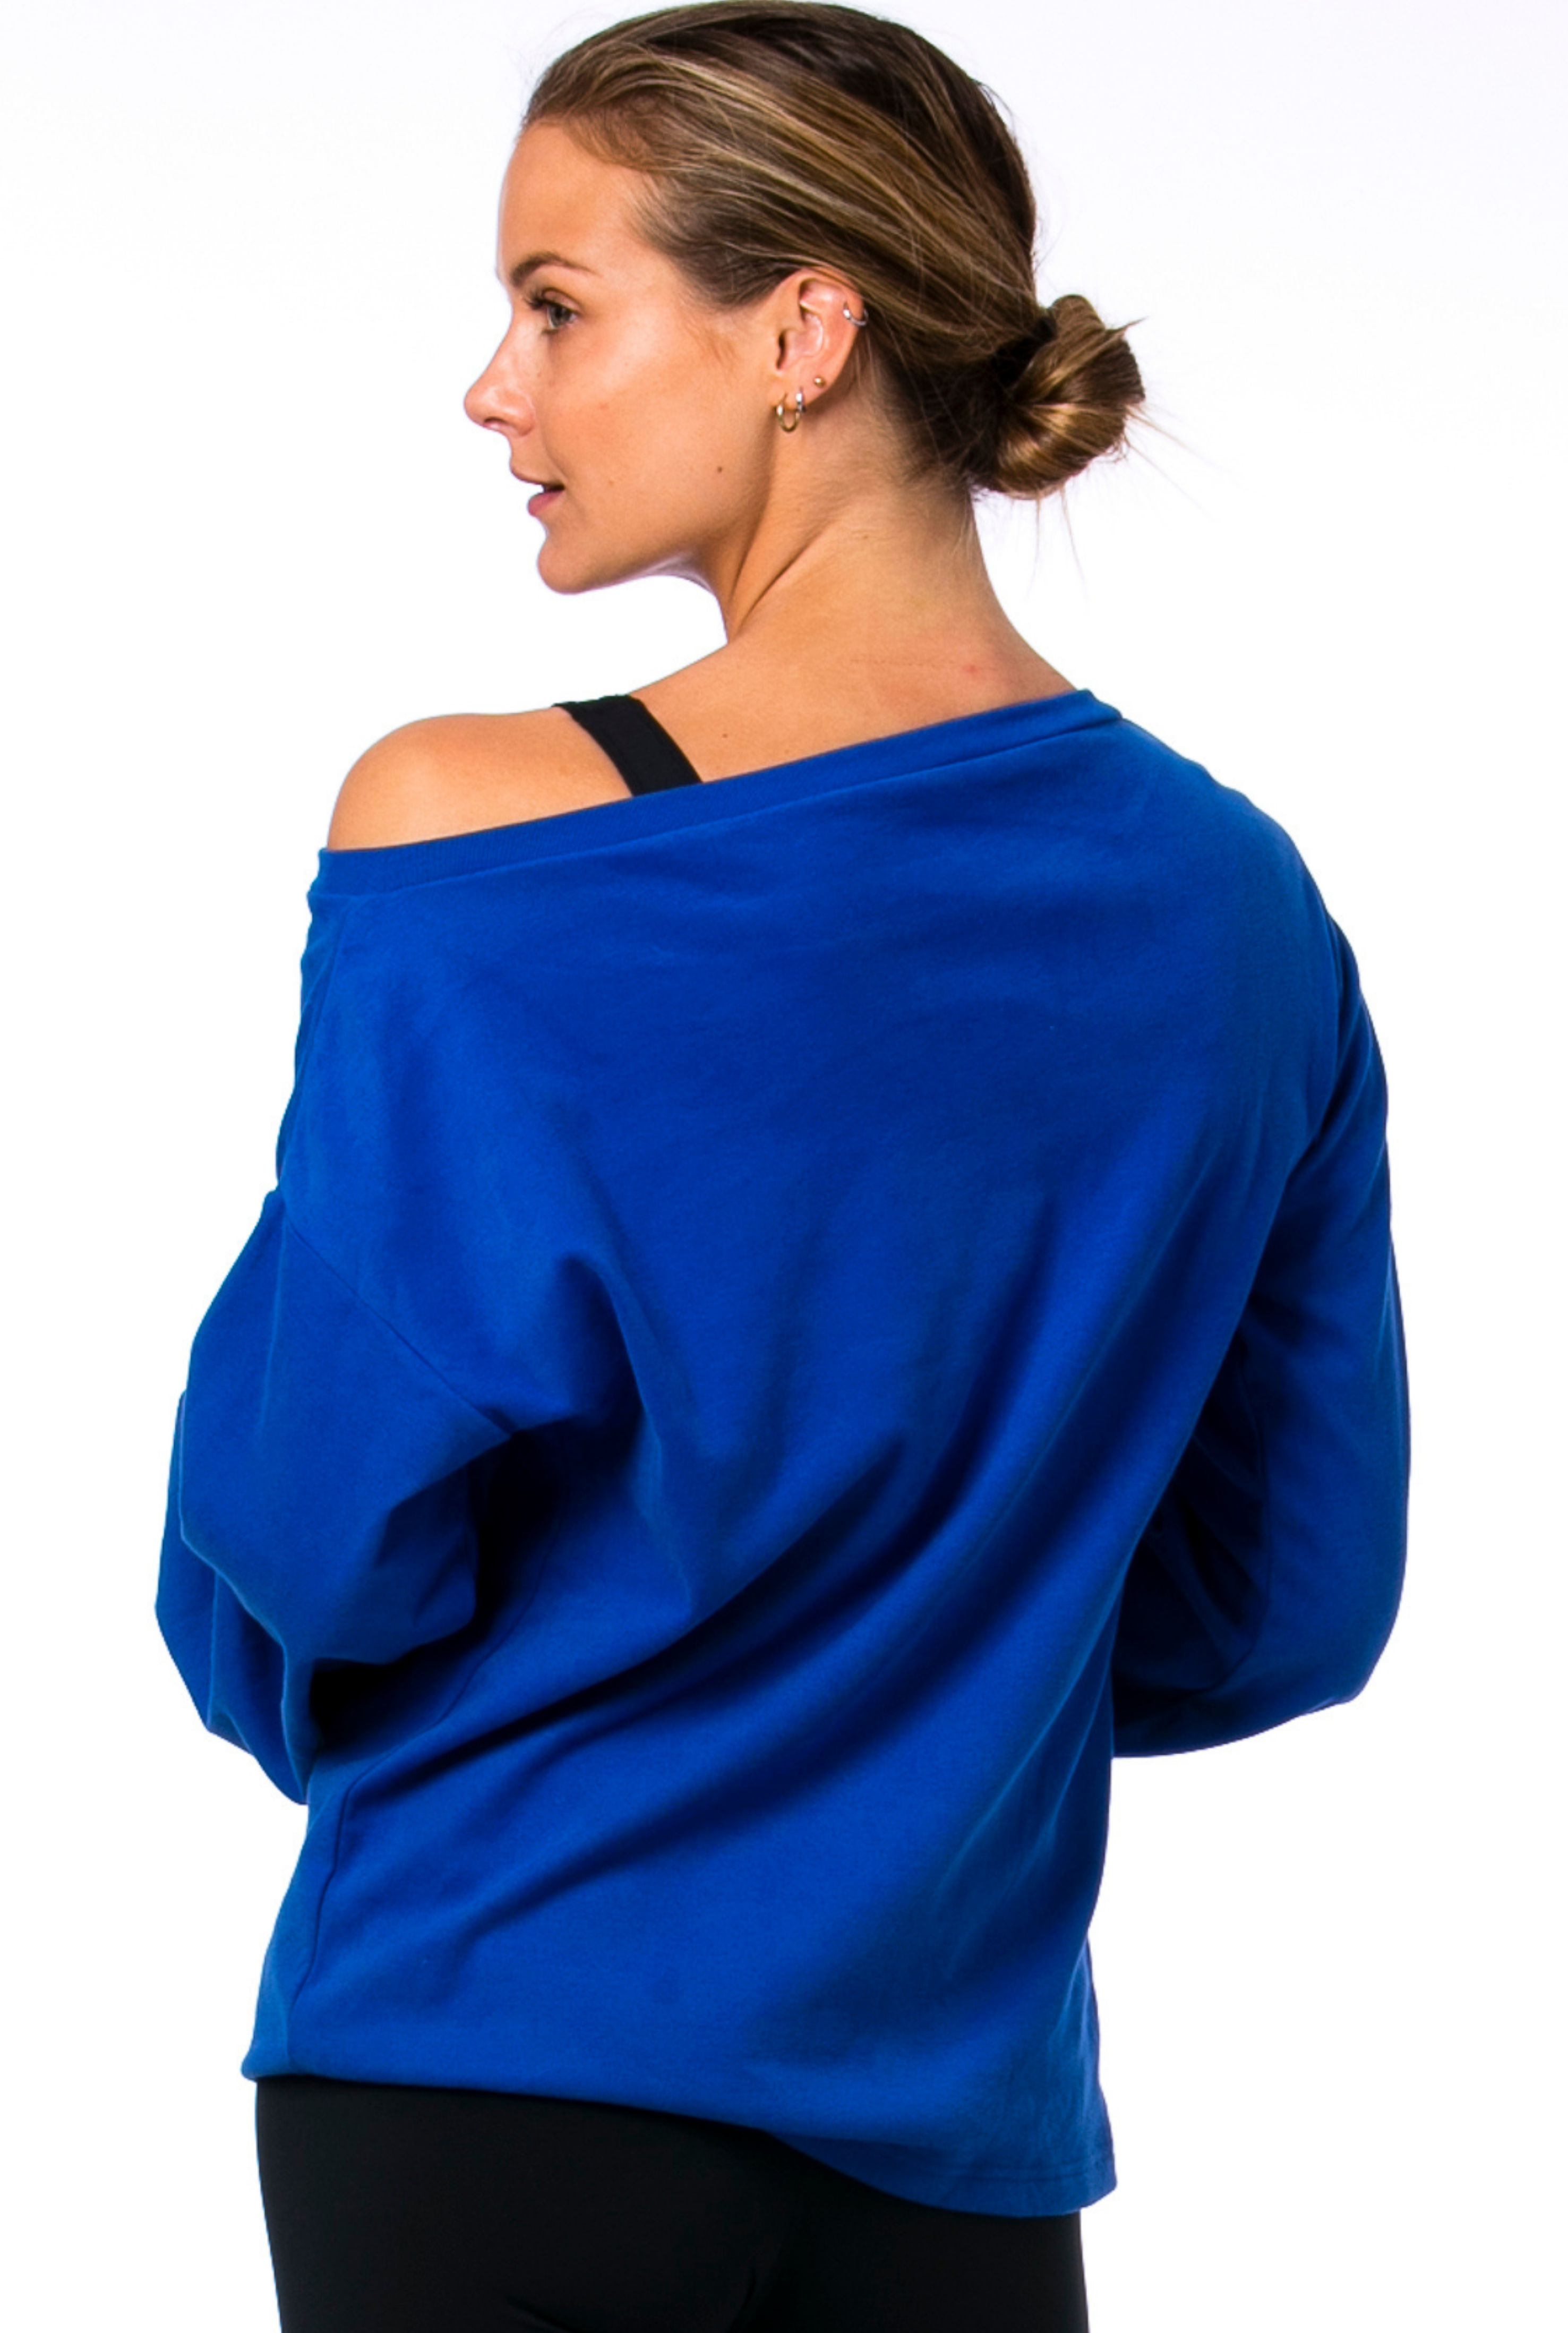 Katani Sweatshirt - Royal Blue